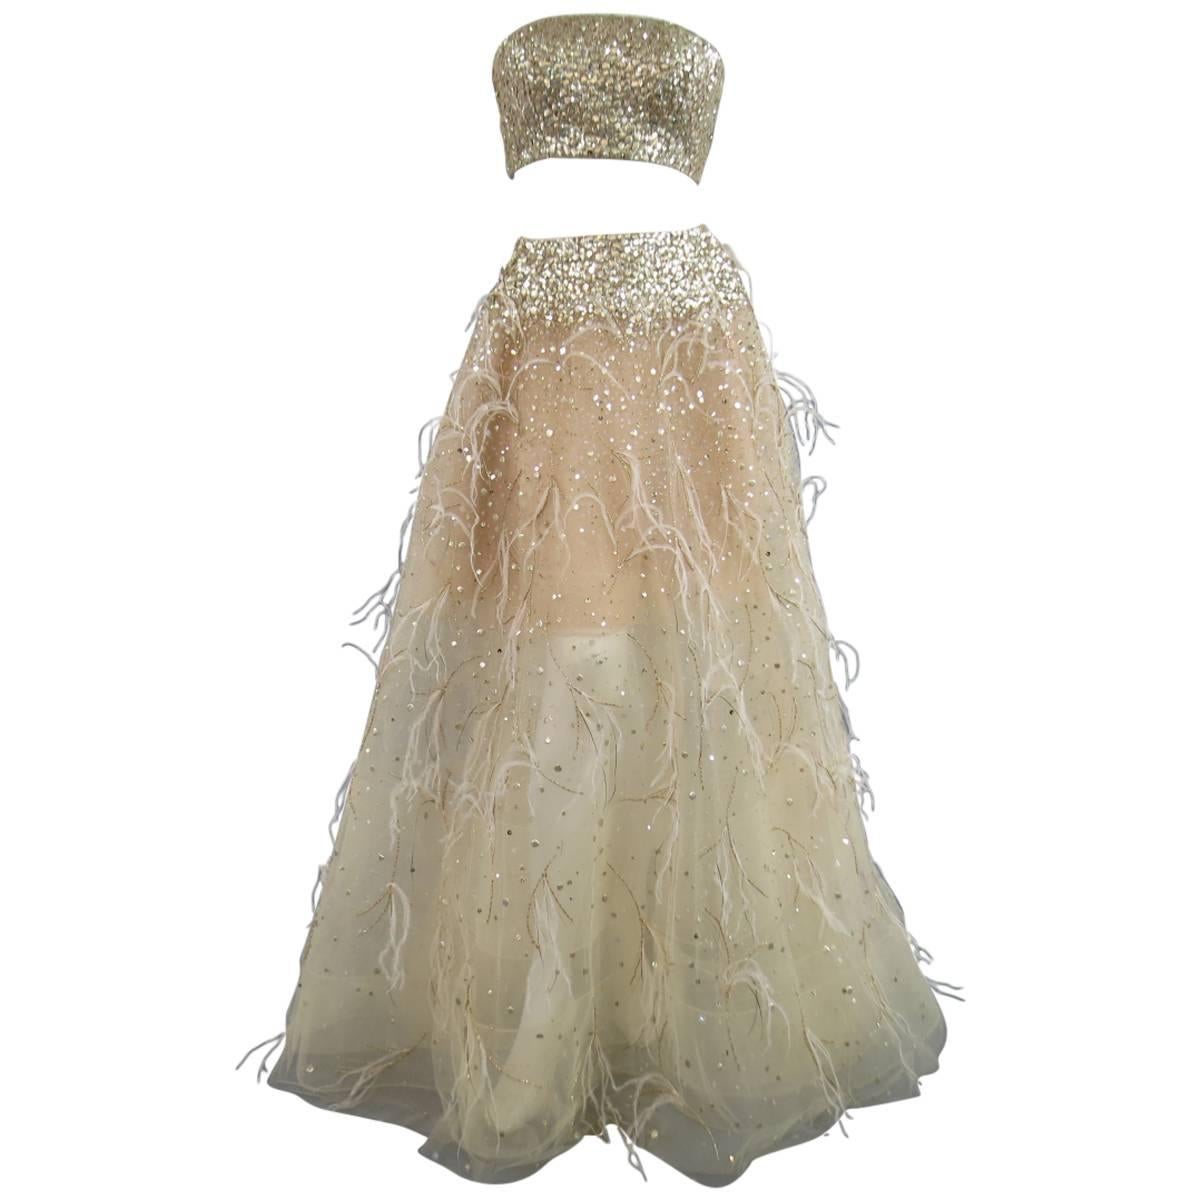 OSCAR DE LA RENTA Spring 2015 4 Gold Feather Tulle Skirt Gold Sequin Bustier Set